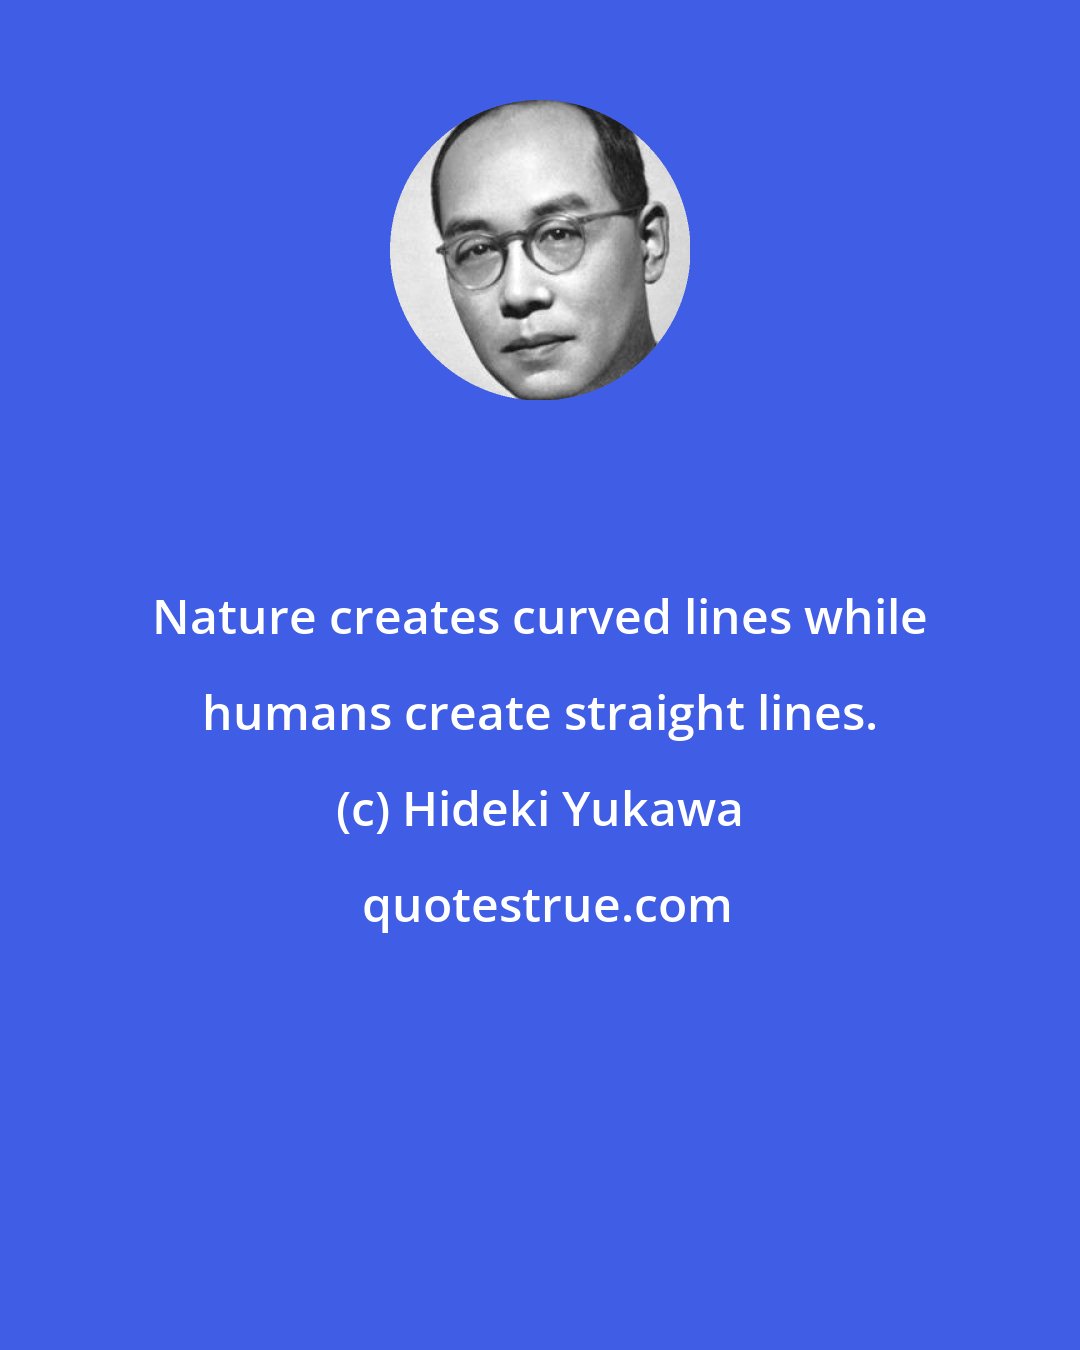 Hideki Yukawa: Nature creates curved lines while humans create straight lines.